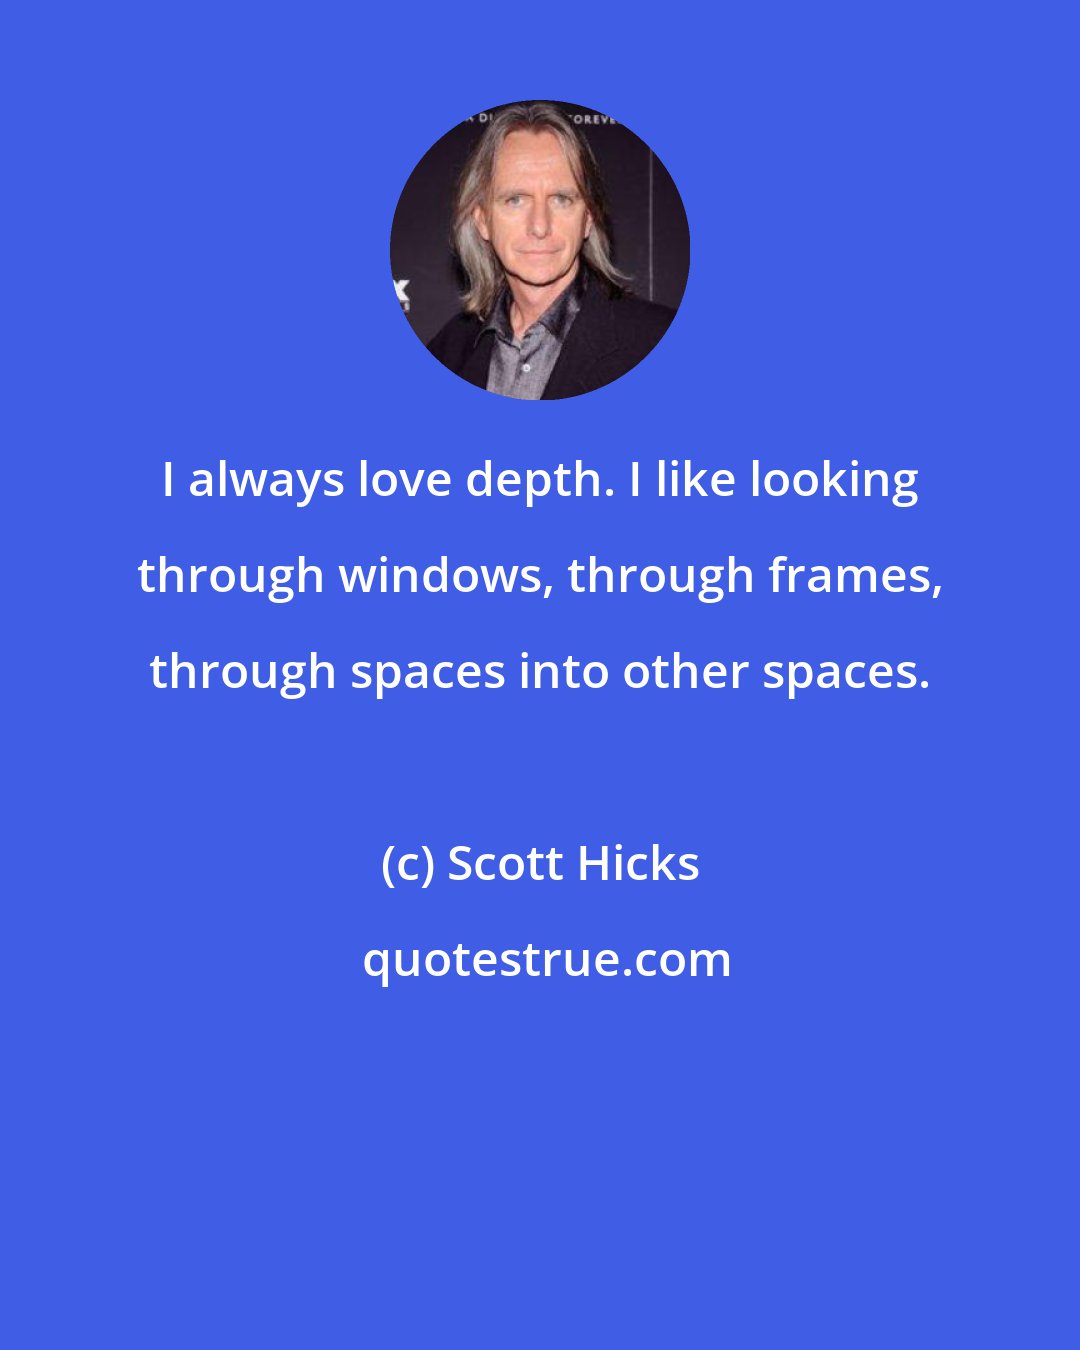 Scott Hicks: I always love depth. I like looking through windows, through frames, through spaces into other spaces.